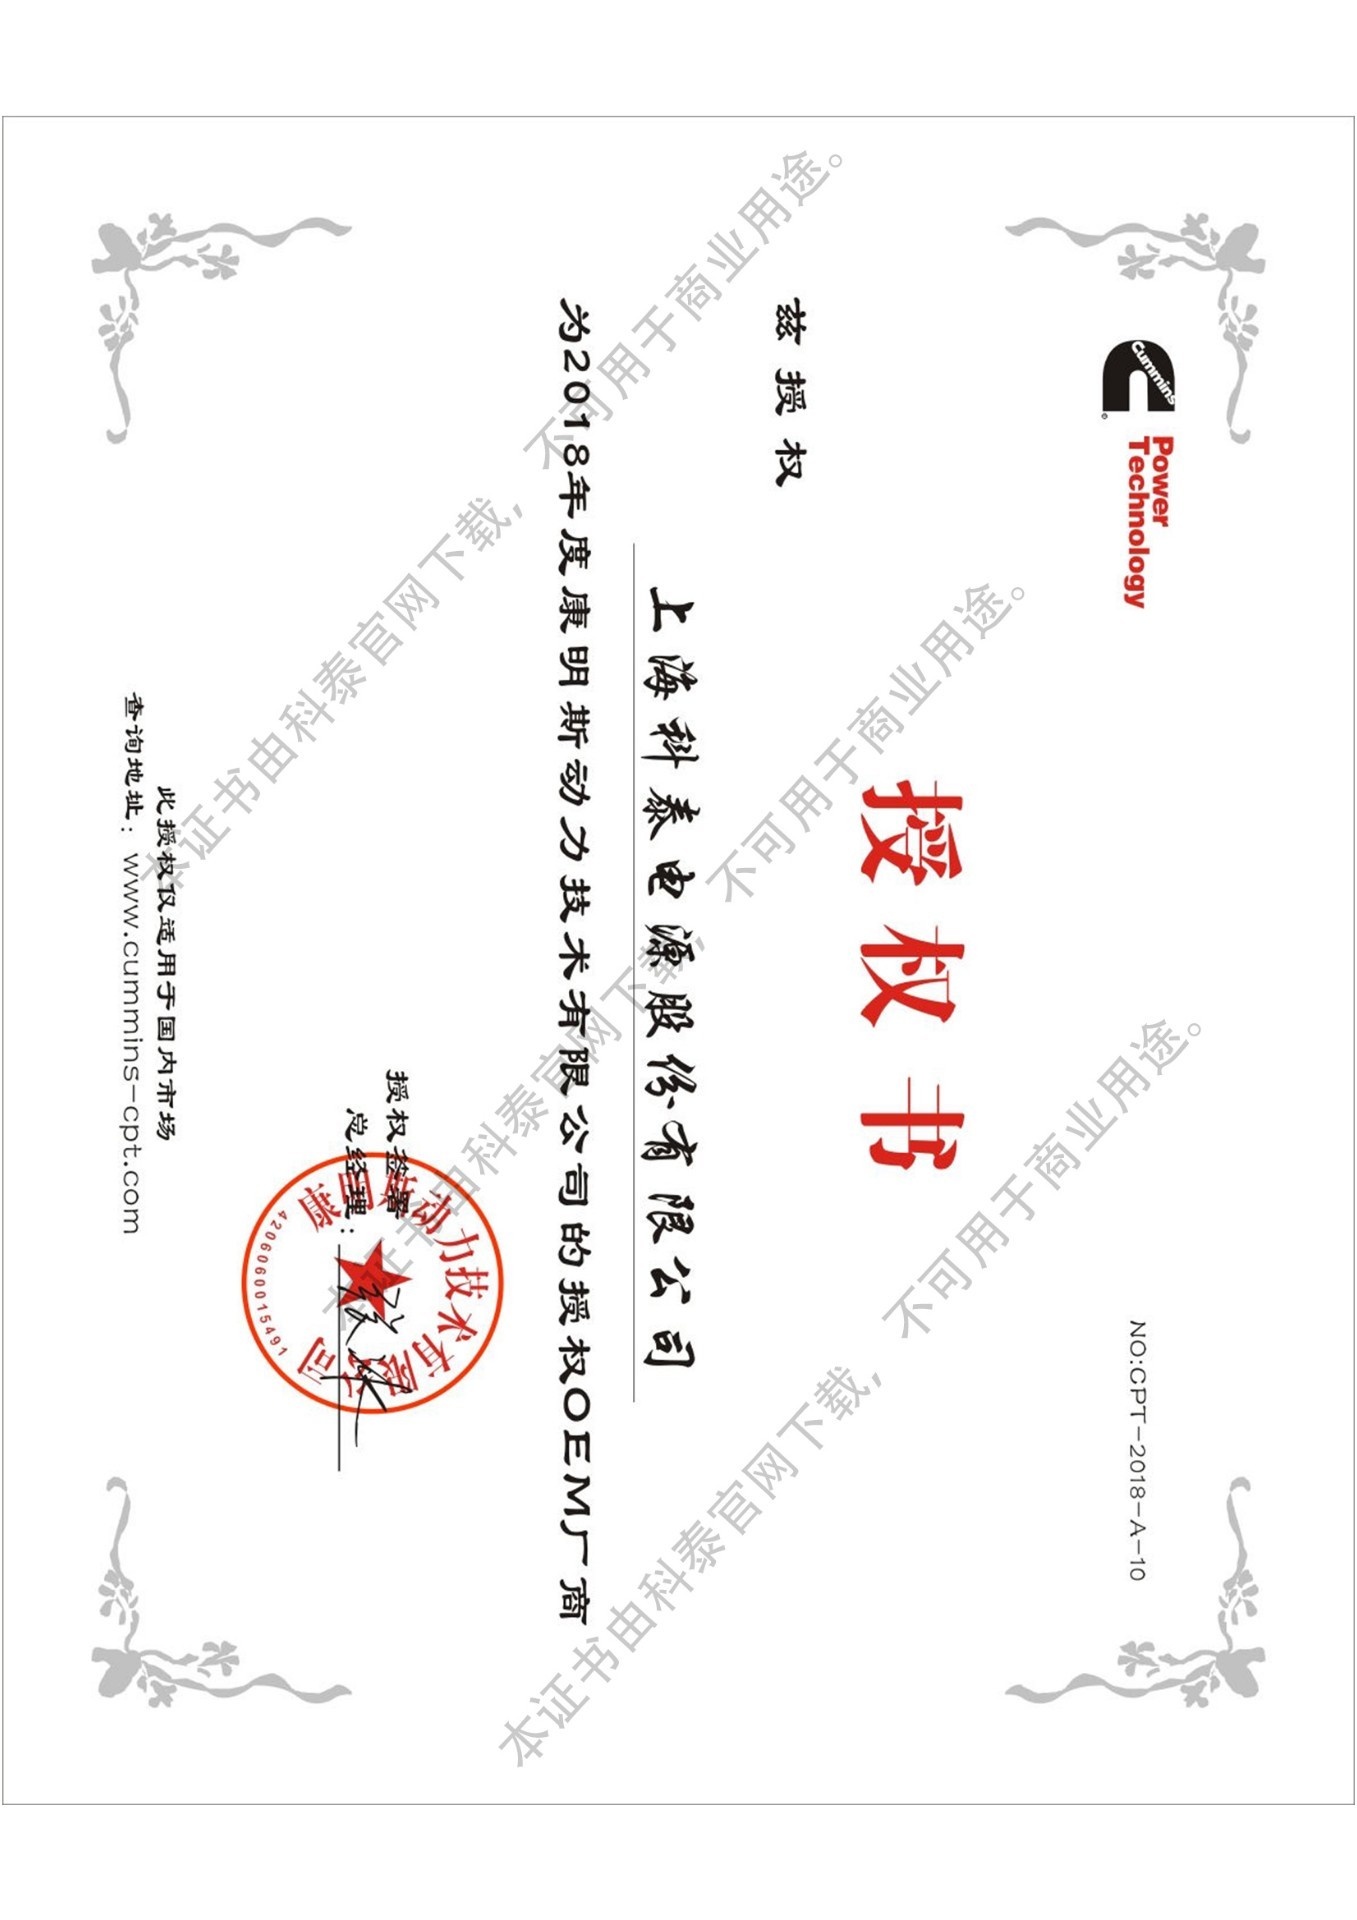 OEM Certificate of Dongfeng Cummins in 2018